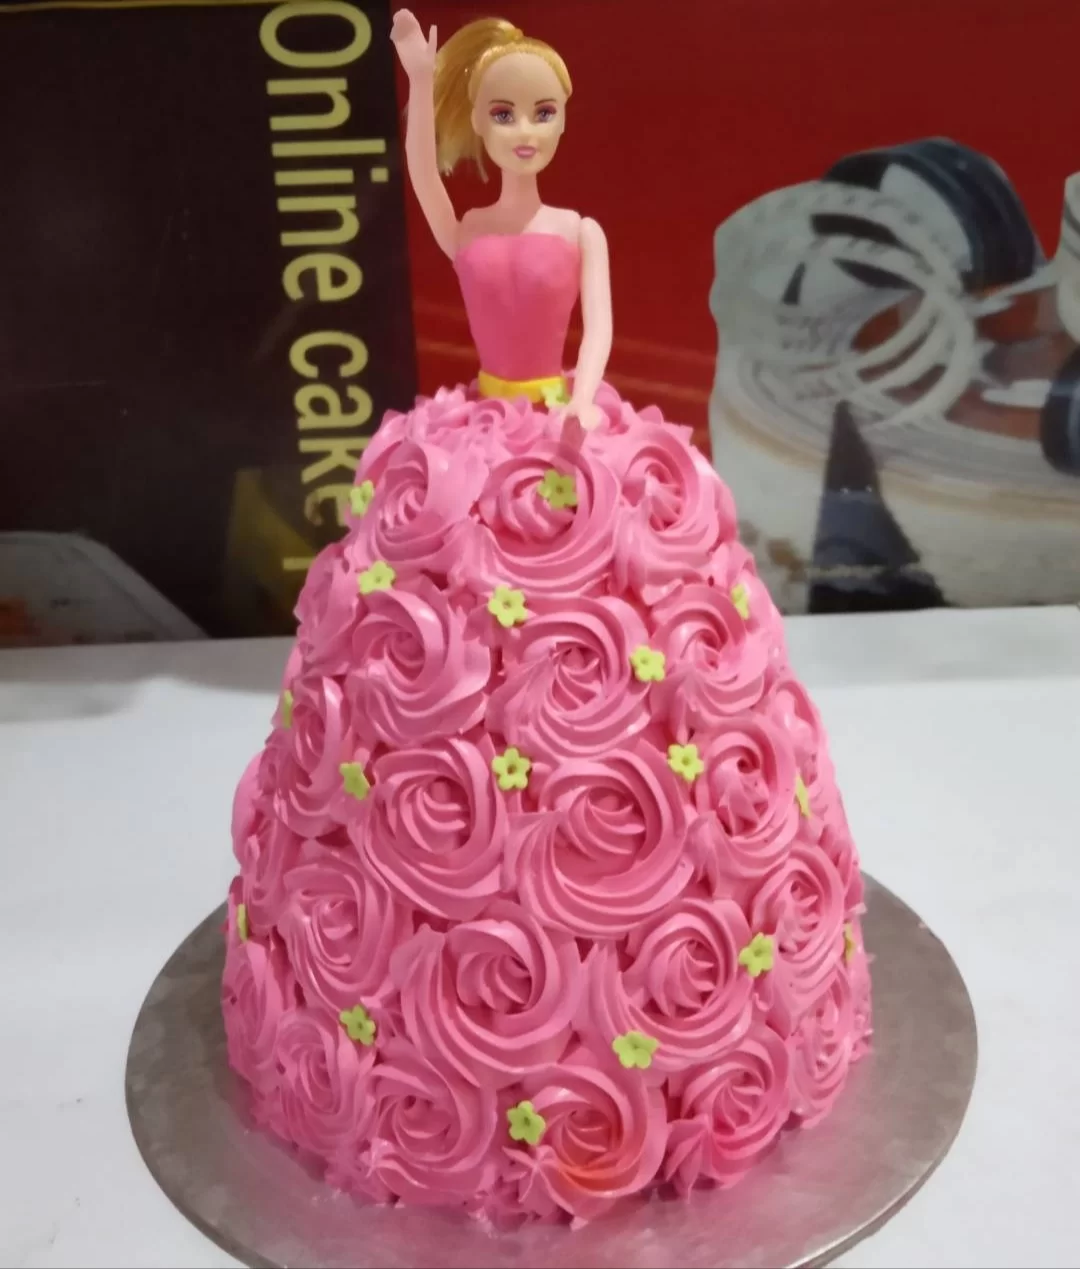 Barbie Doll Cake - The Cakeroom Bakery Shop